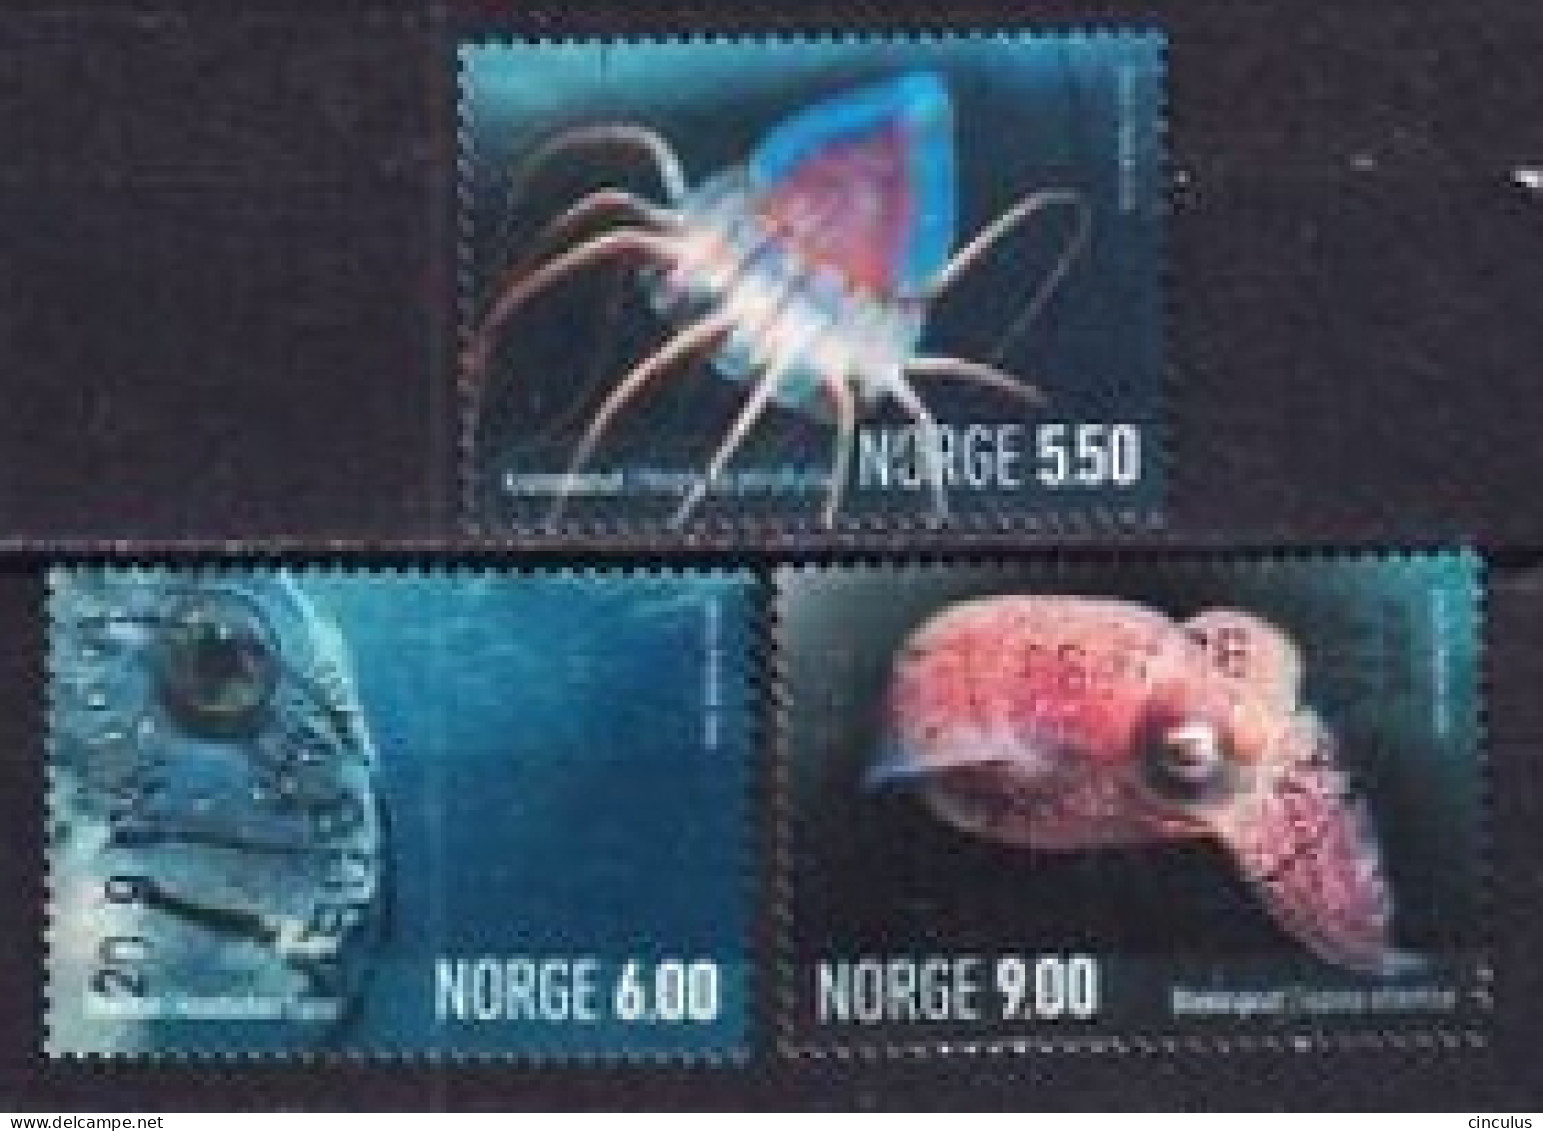 2004. Norway. Marine Life. Used. Mi. Nr. 1490-92 - Used Stamps